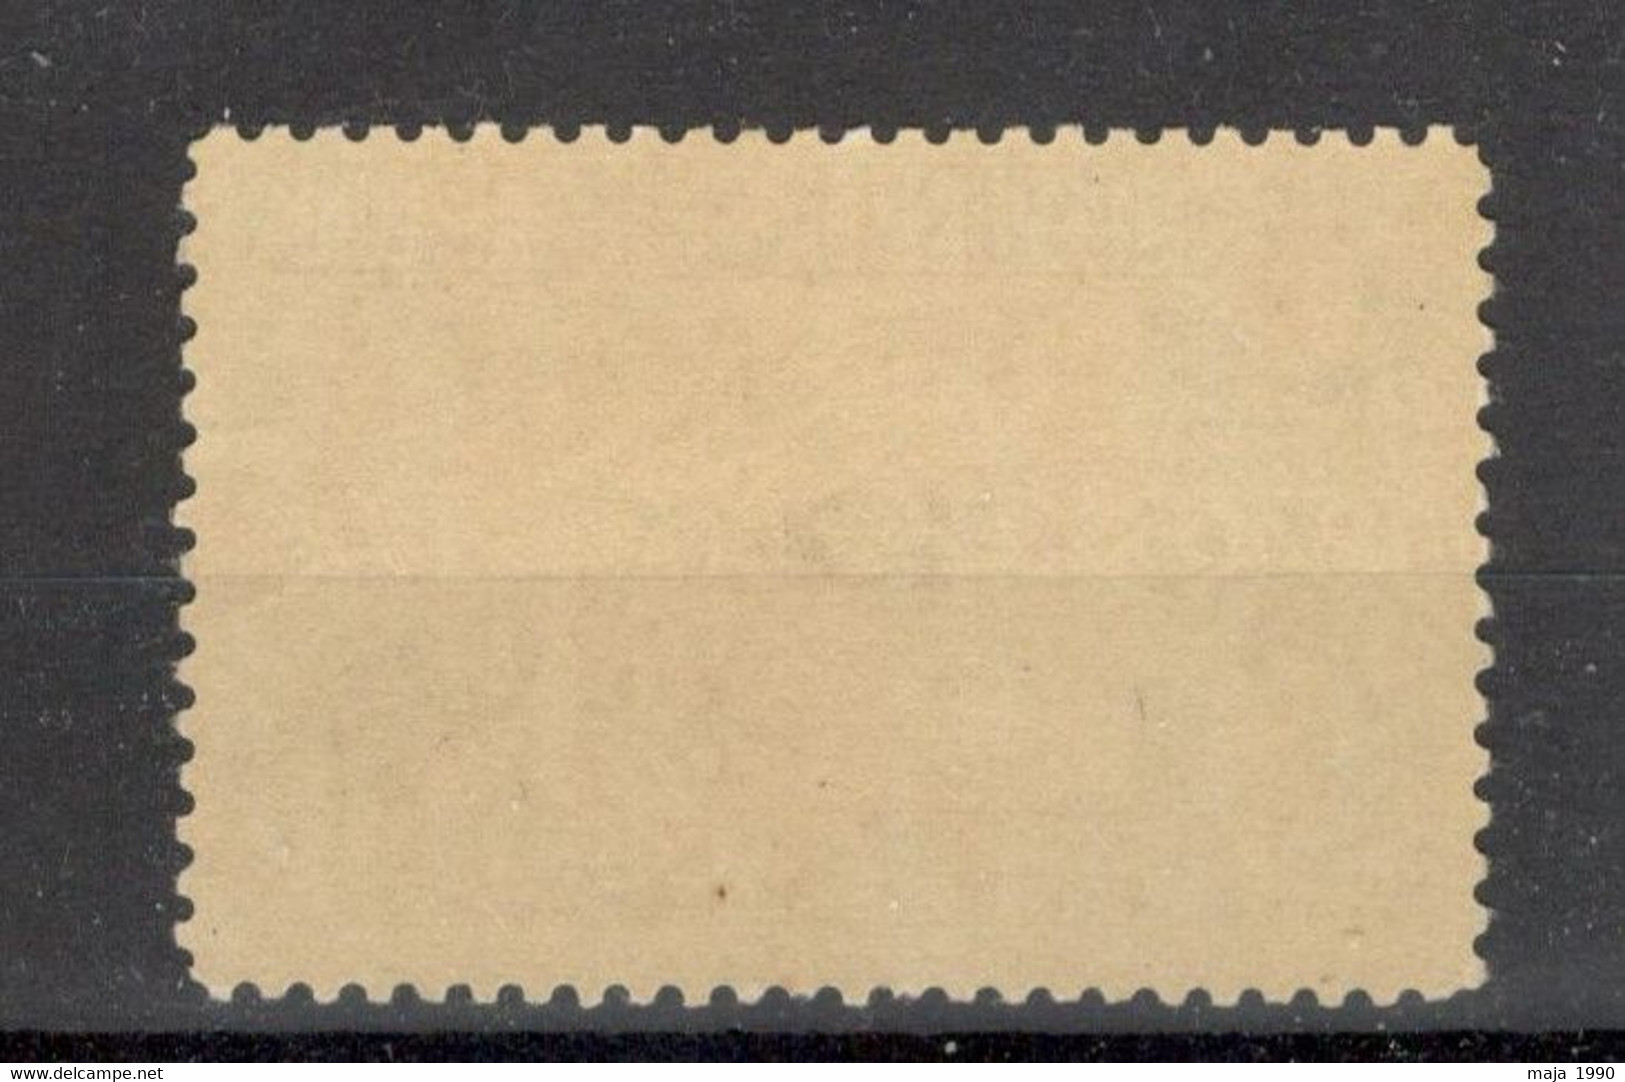 CUBA - MNH STAMP - ANNIVERSARY POSTAGE STAMP - 1940. - Unused Stamps